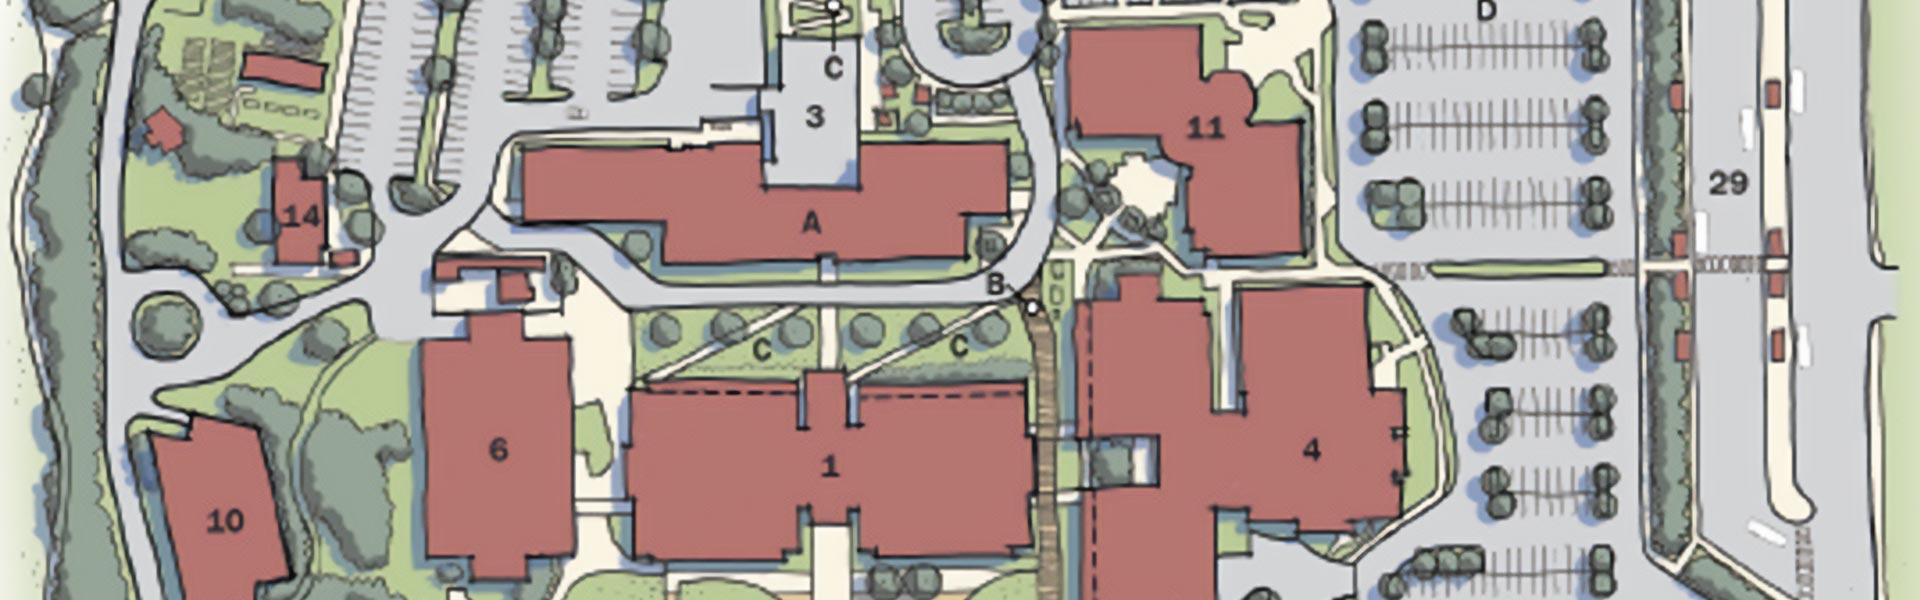 Campus map blueprint